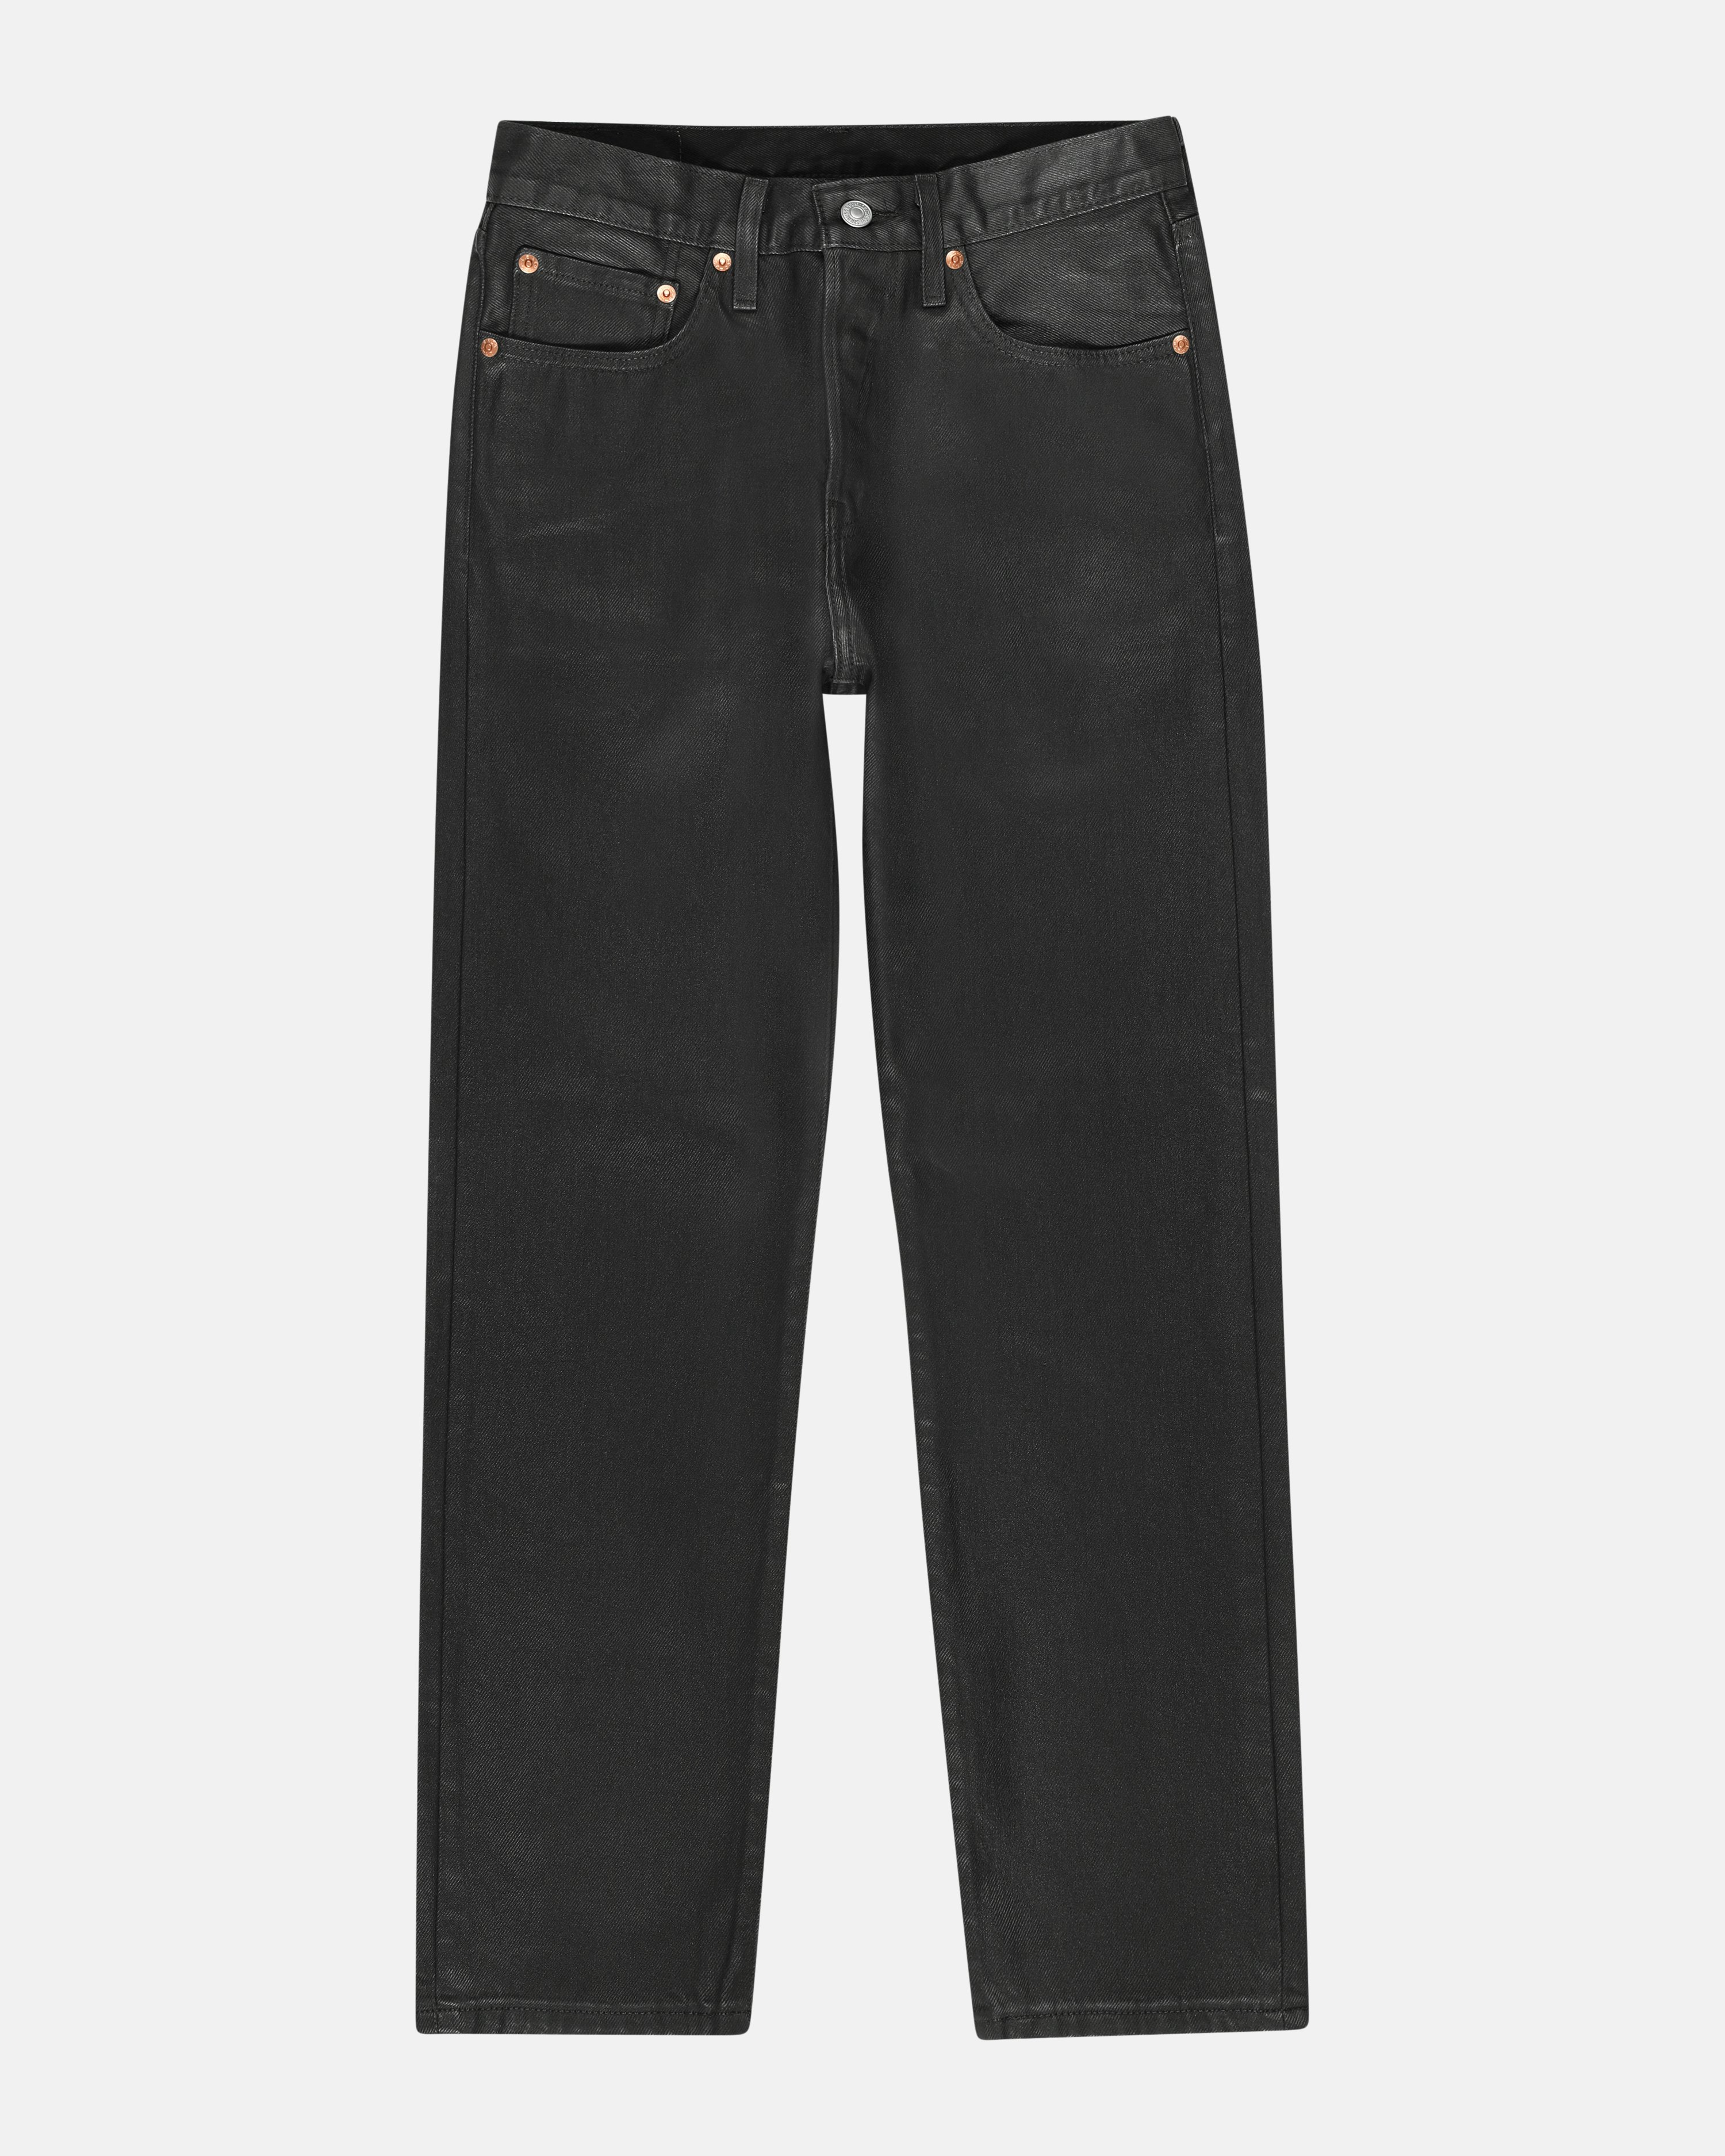 Levi's 501® Wax Coated Jeans Black, Women